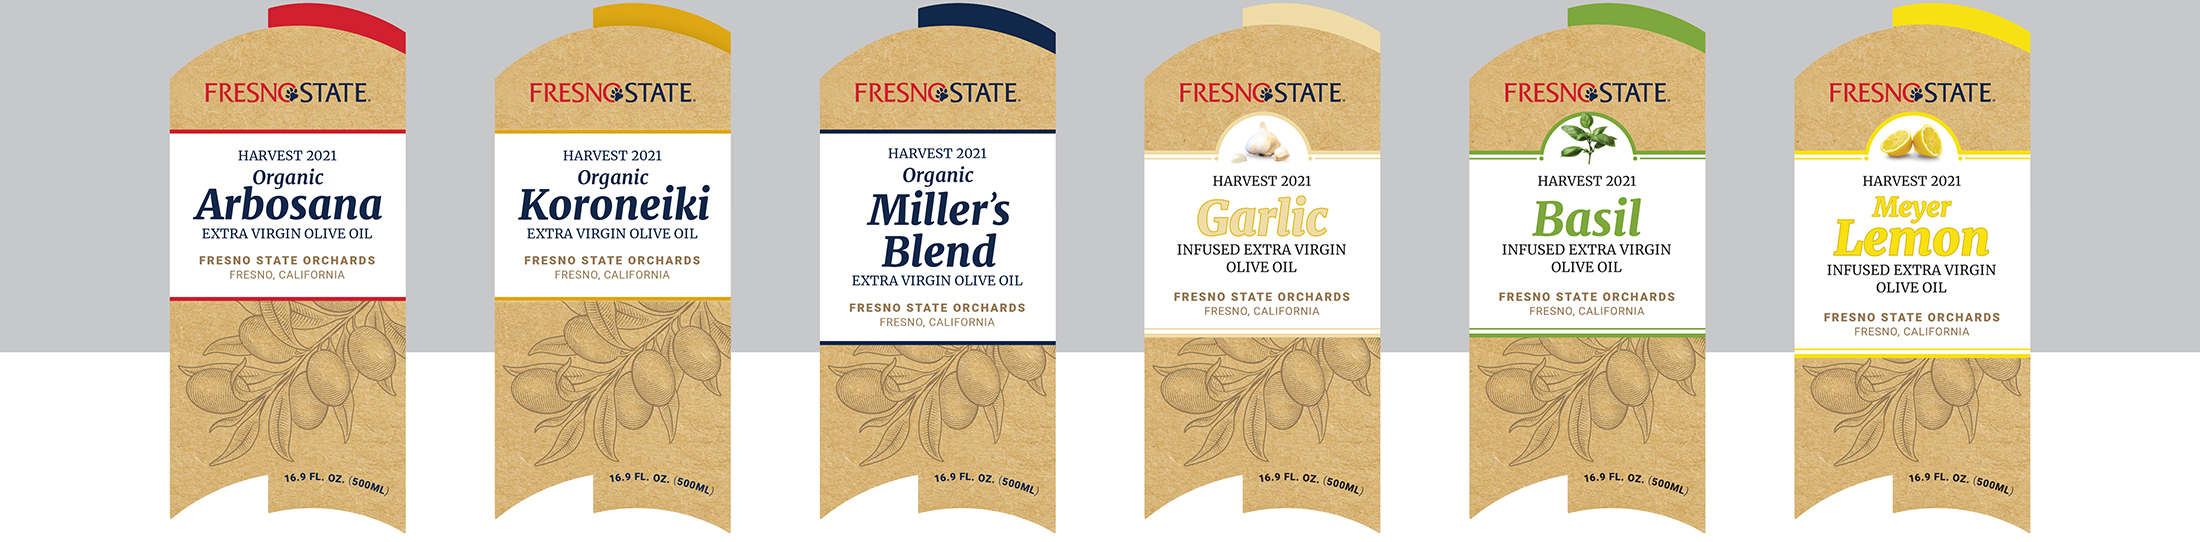 Fresno State Olive Oil labels